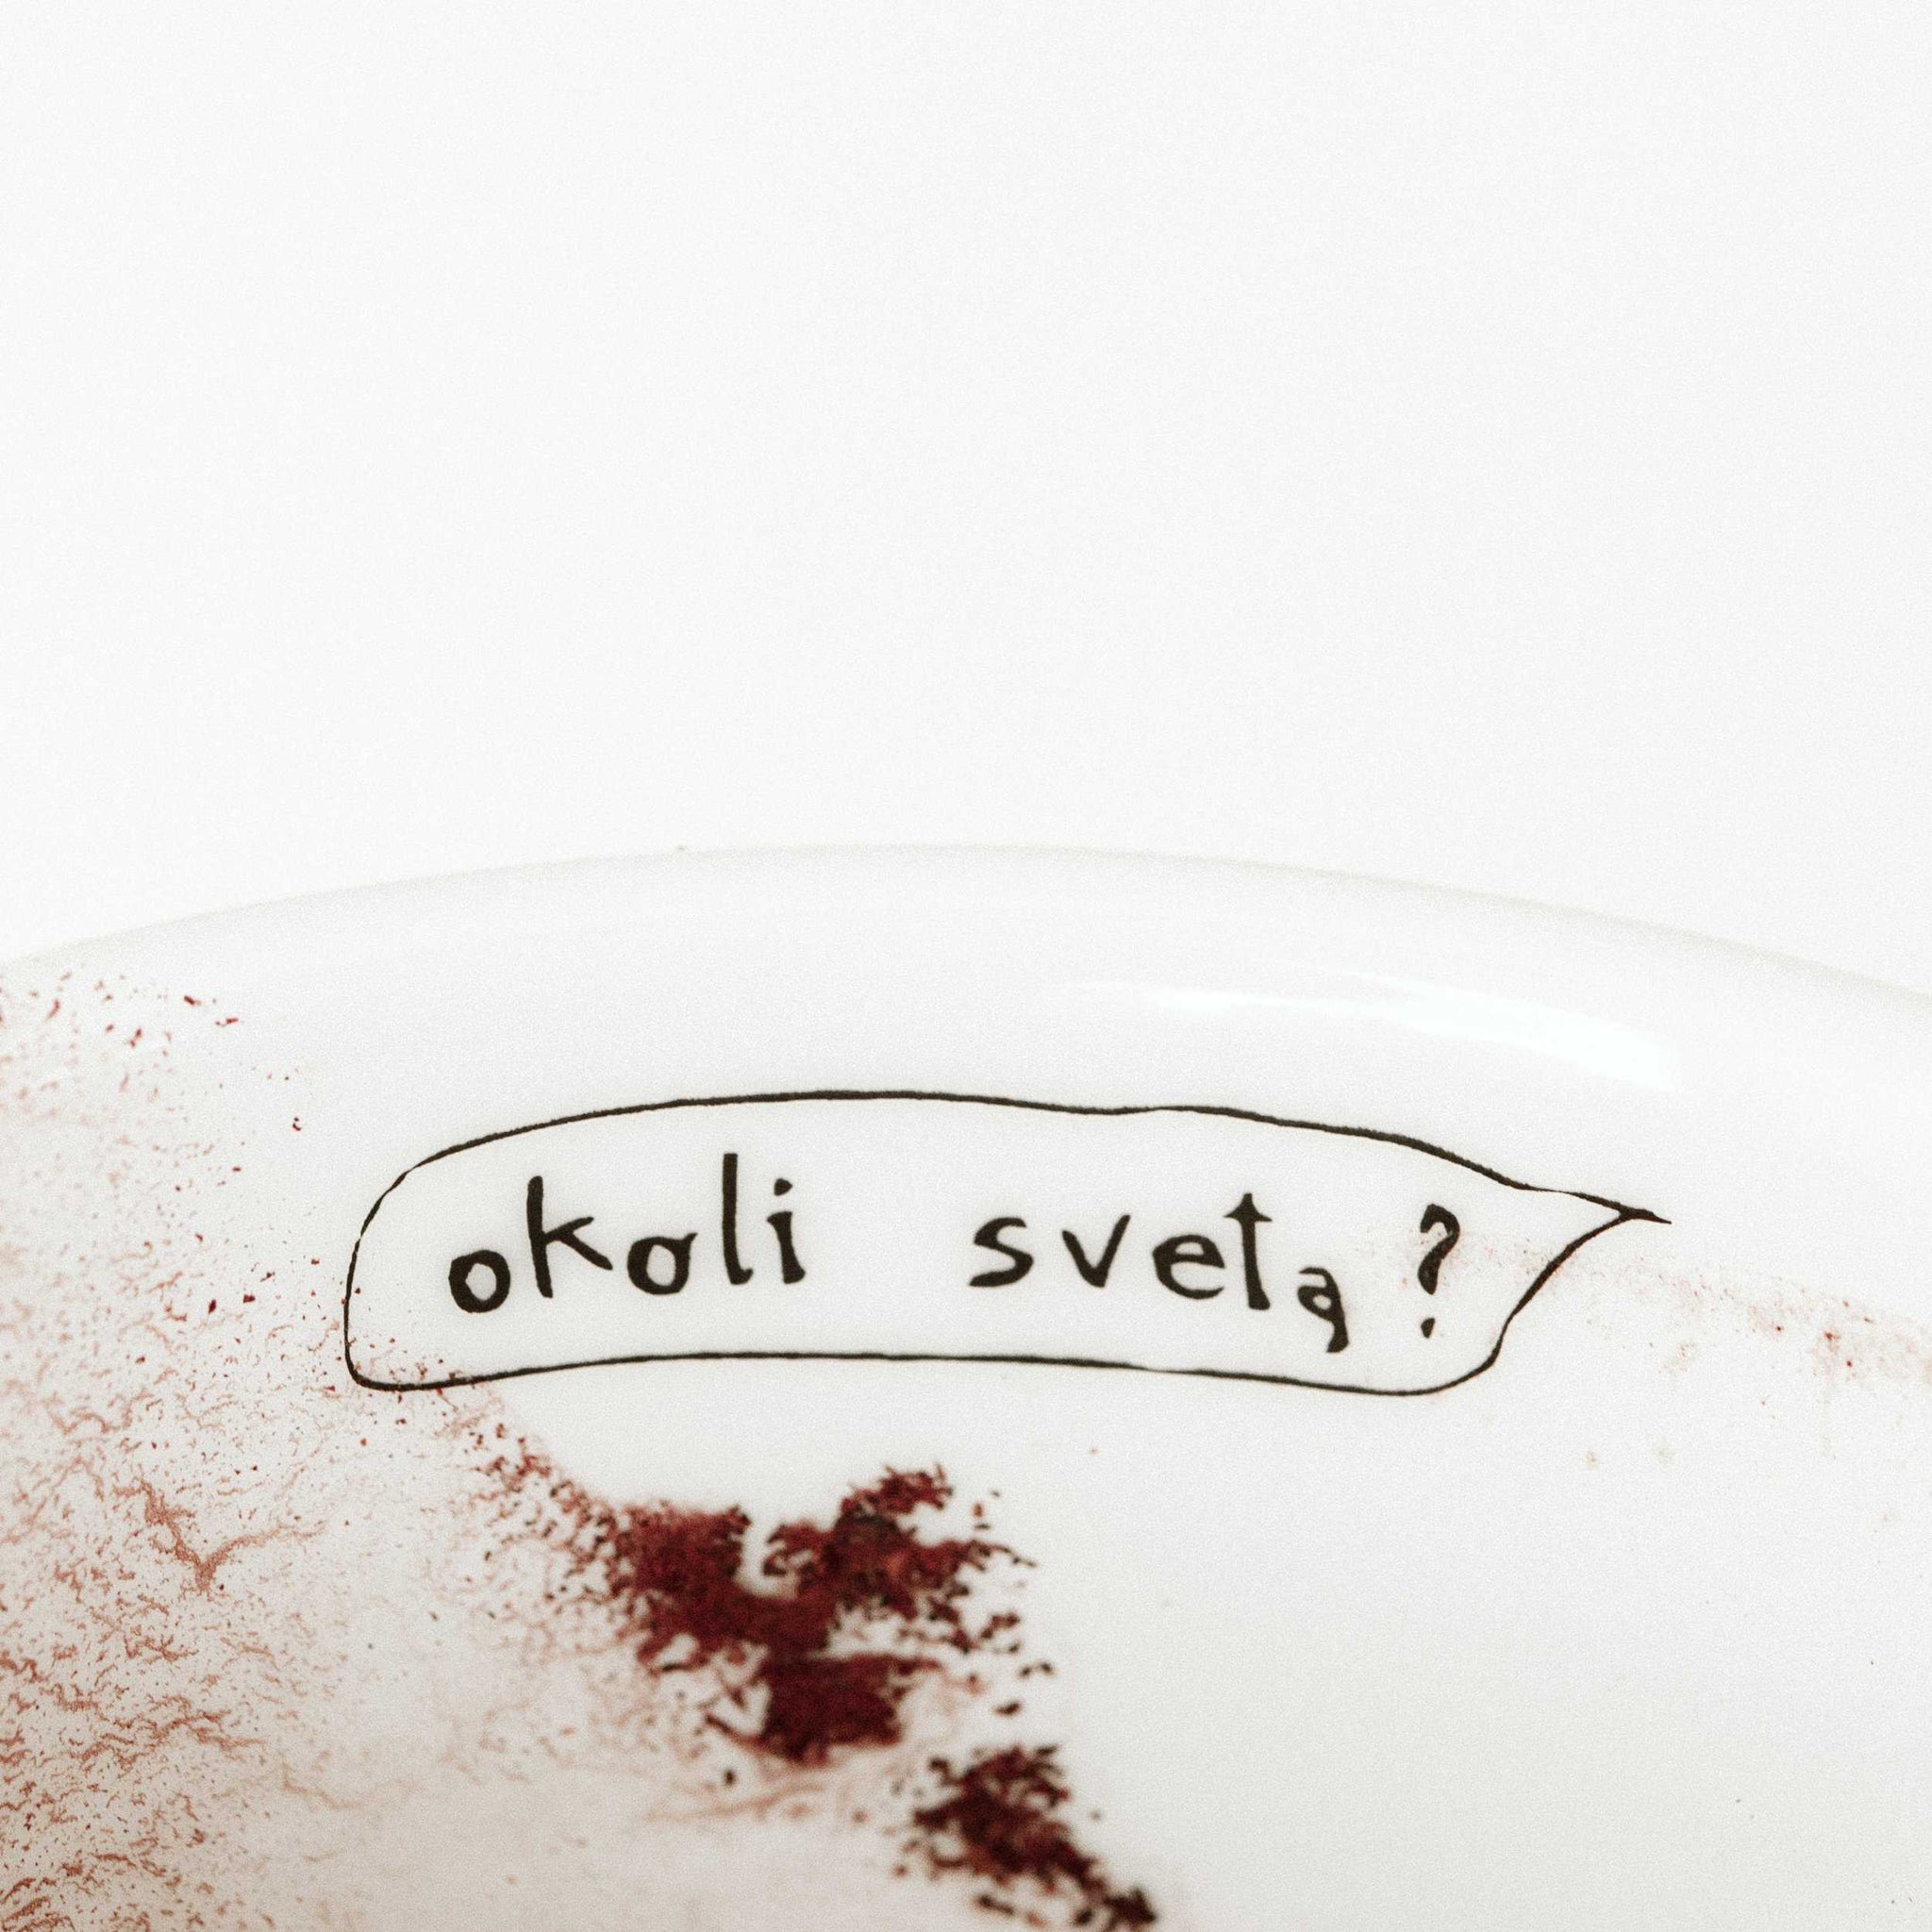 "okoli sveta?" text on the edge of the 350ml ALMA porcelain cup